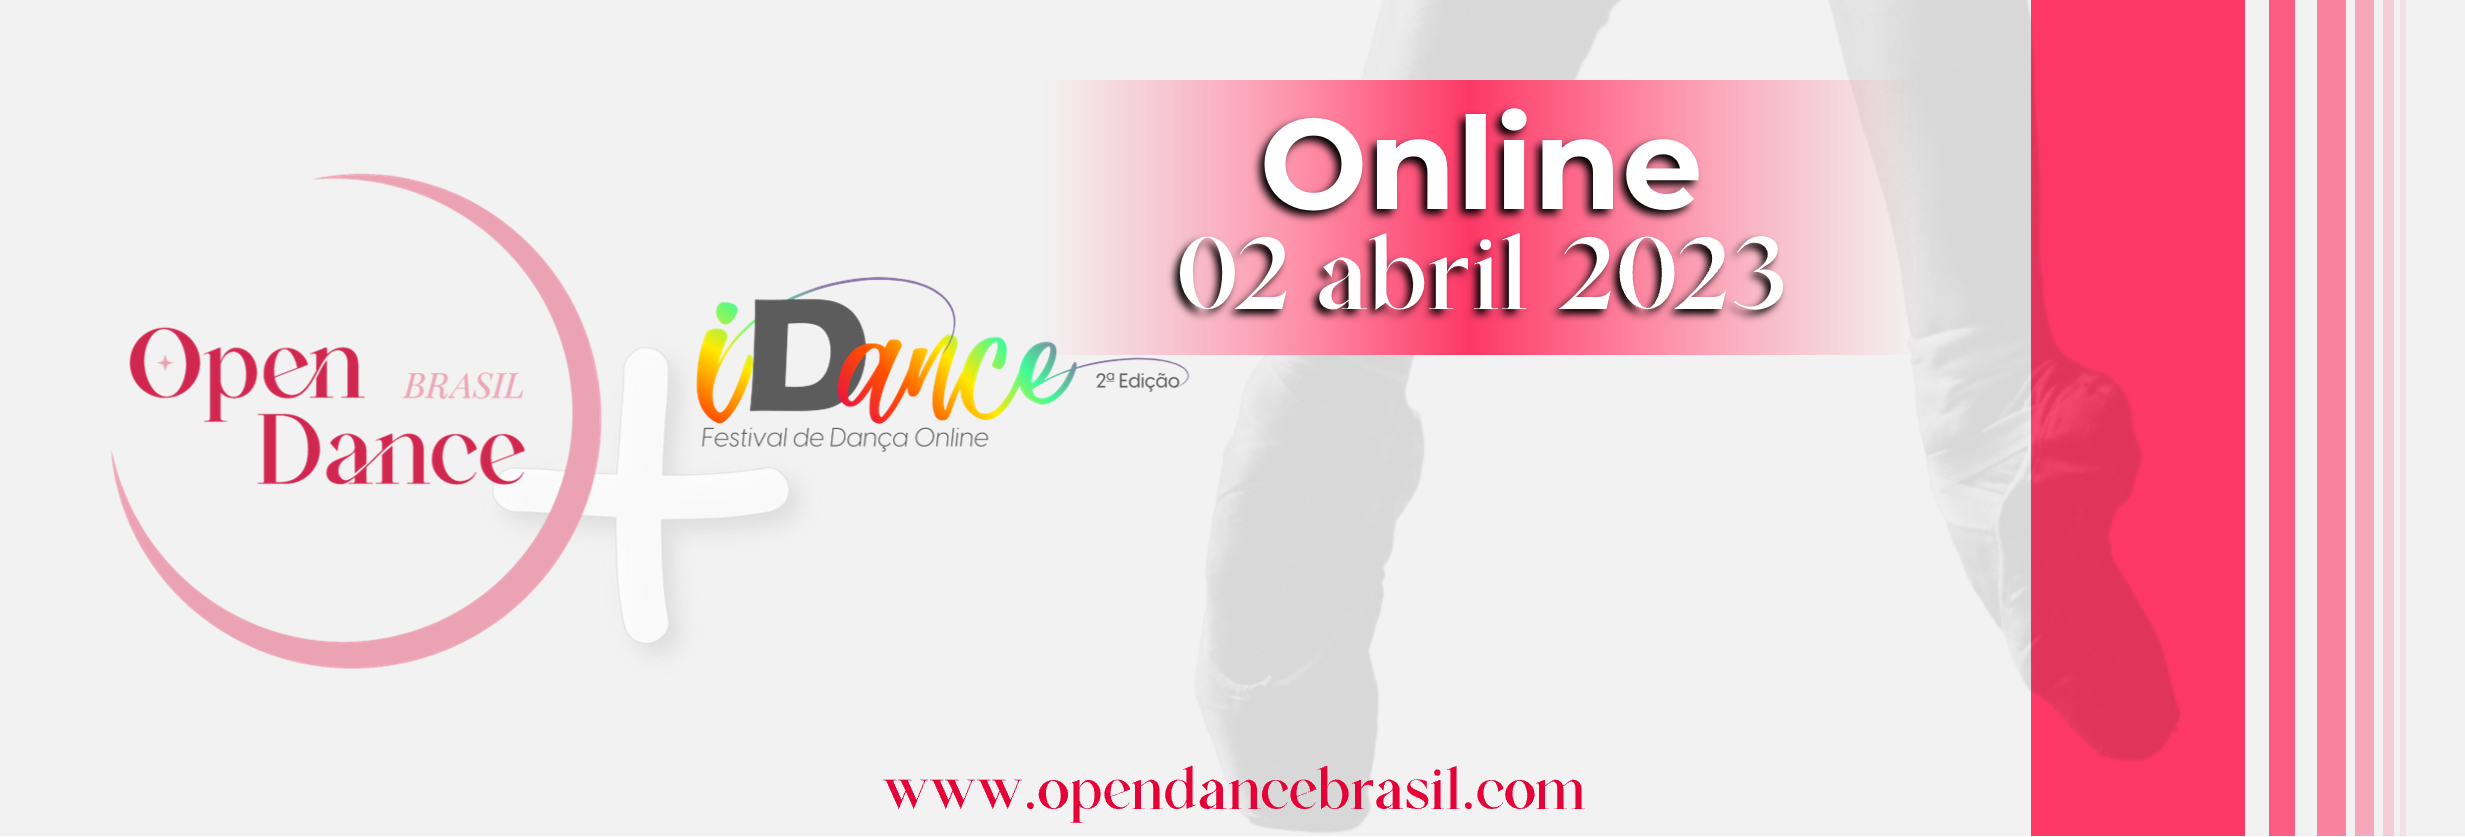 Open Dance Brasil Online + iDance Festival de Dança Online